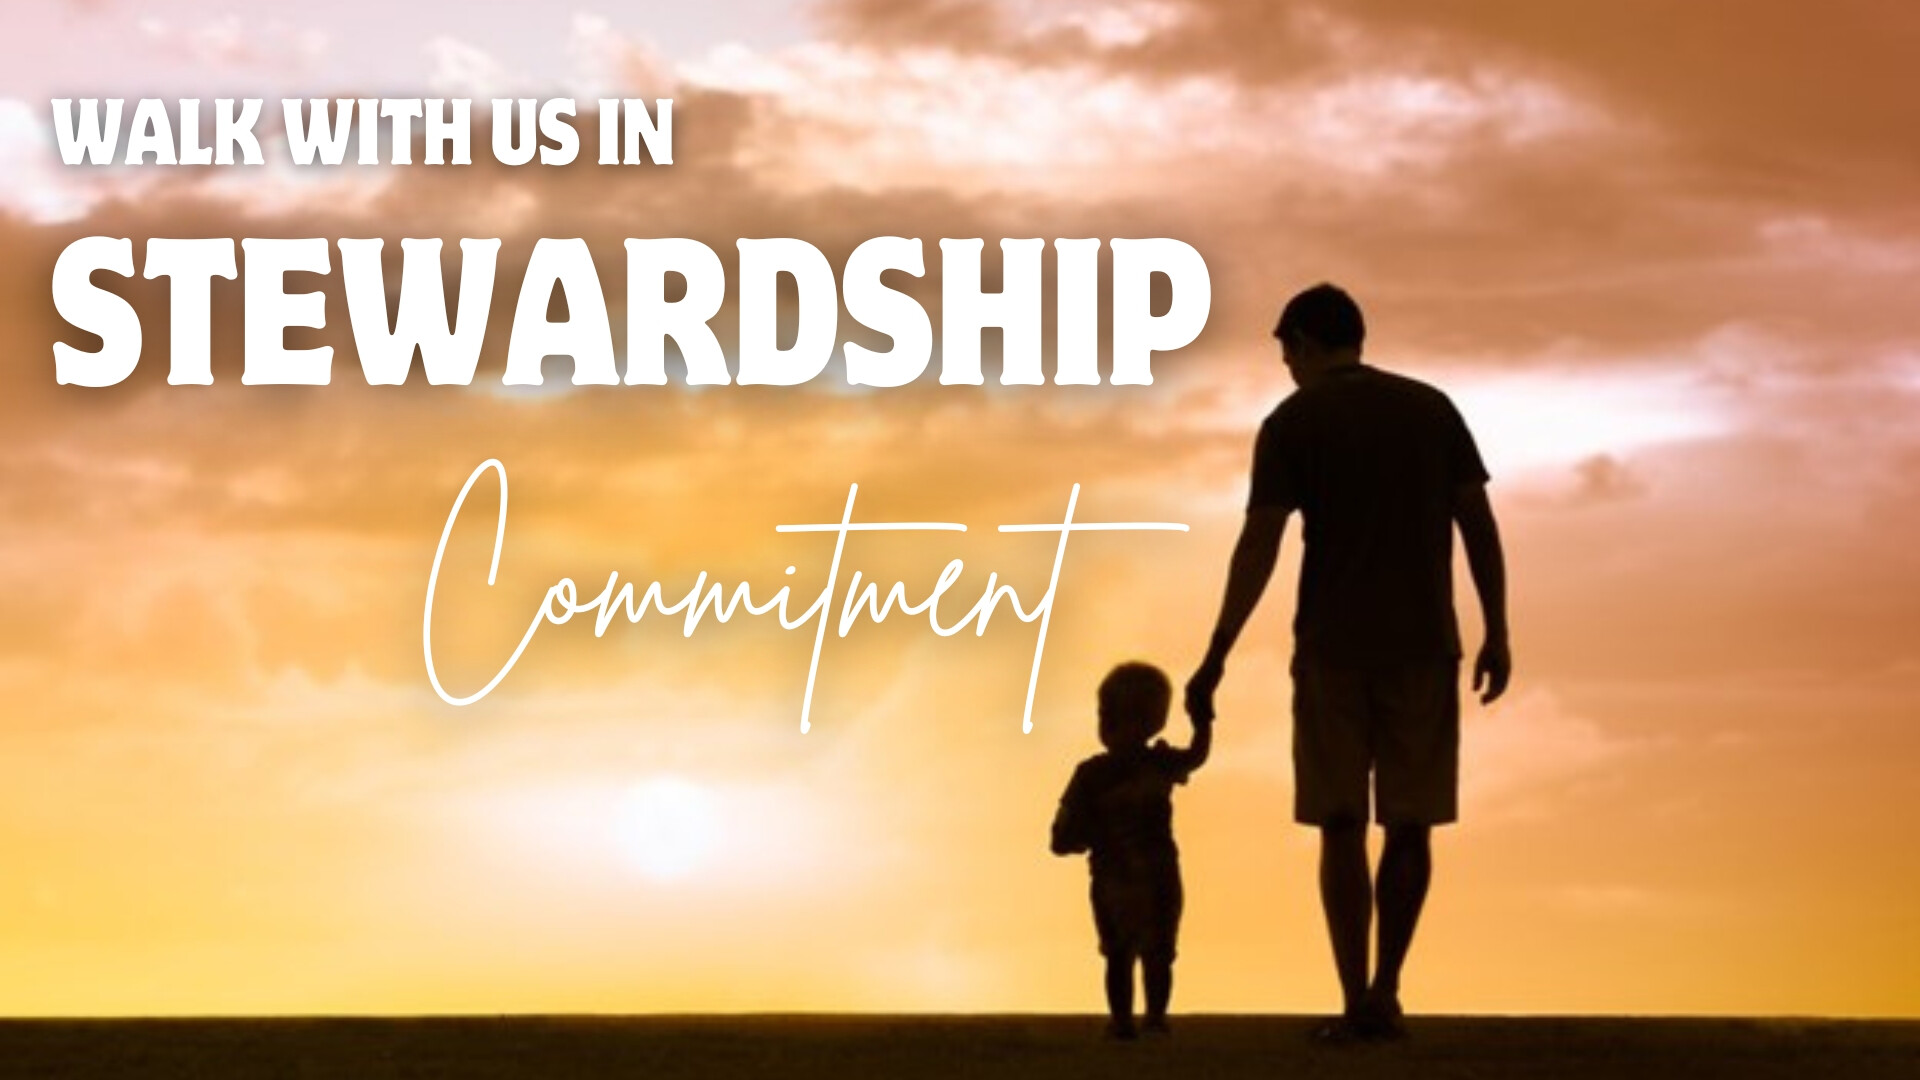 Walk With Us In Stewardship: Commitment, Children's Message